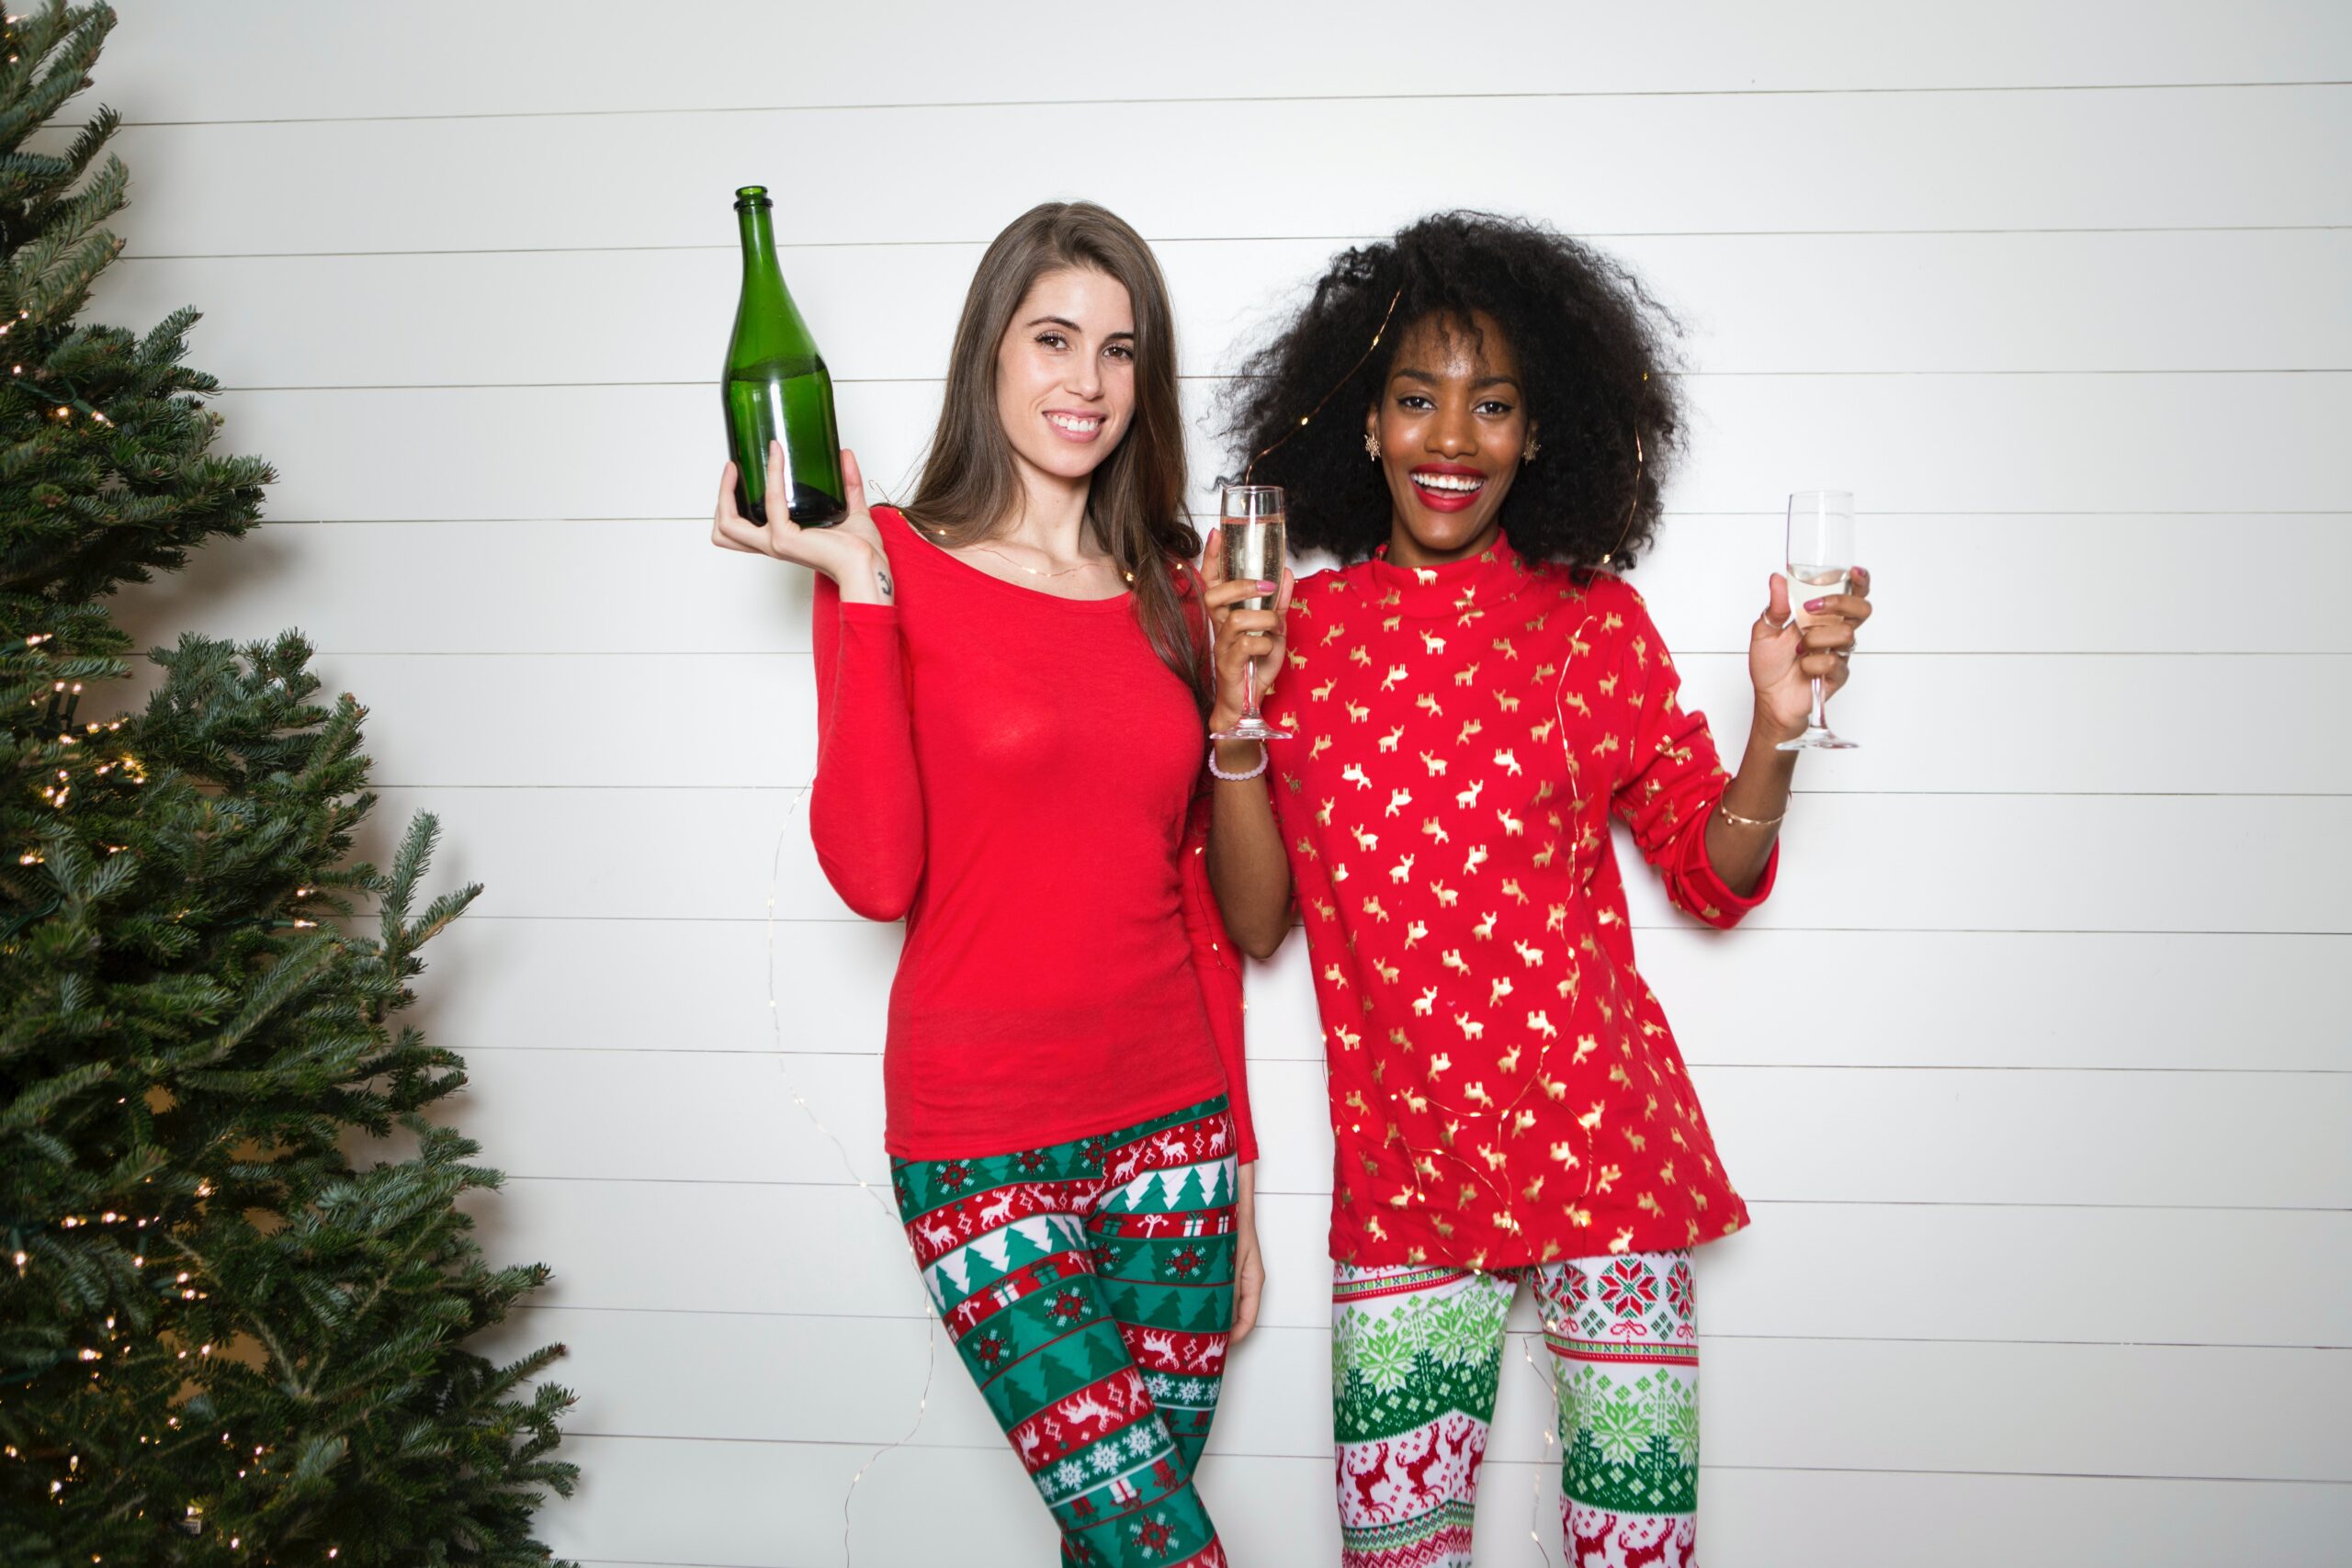 Two women dressed festively